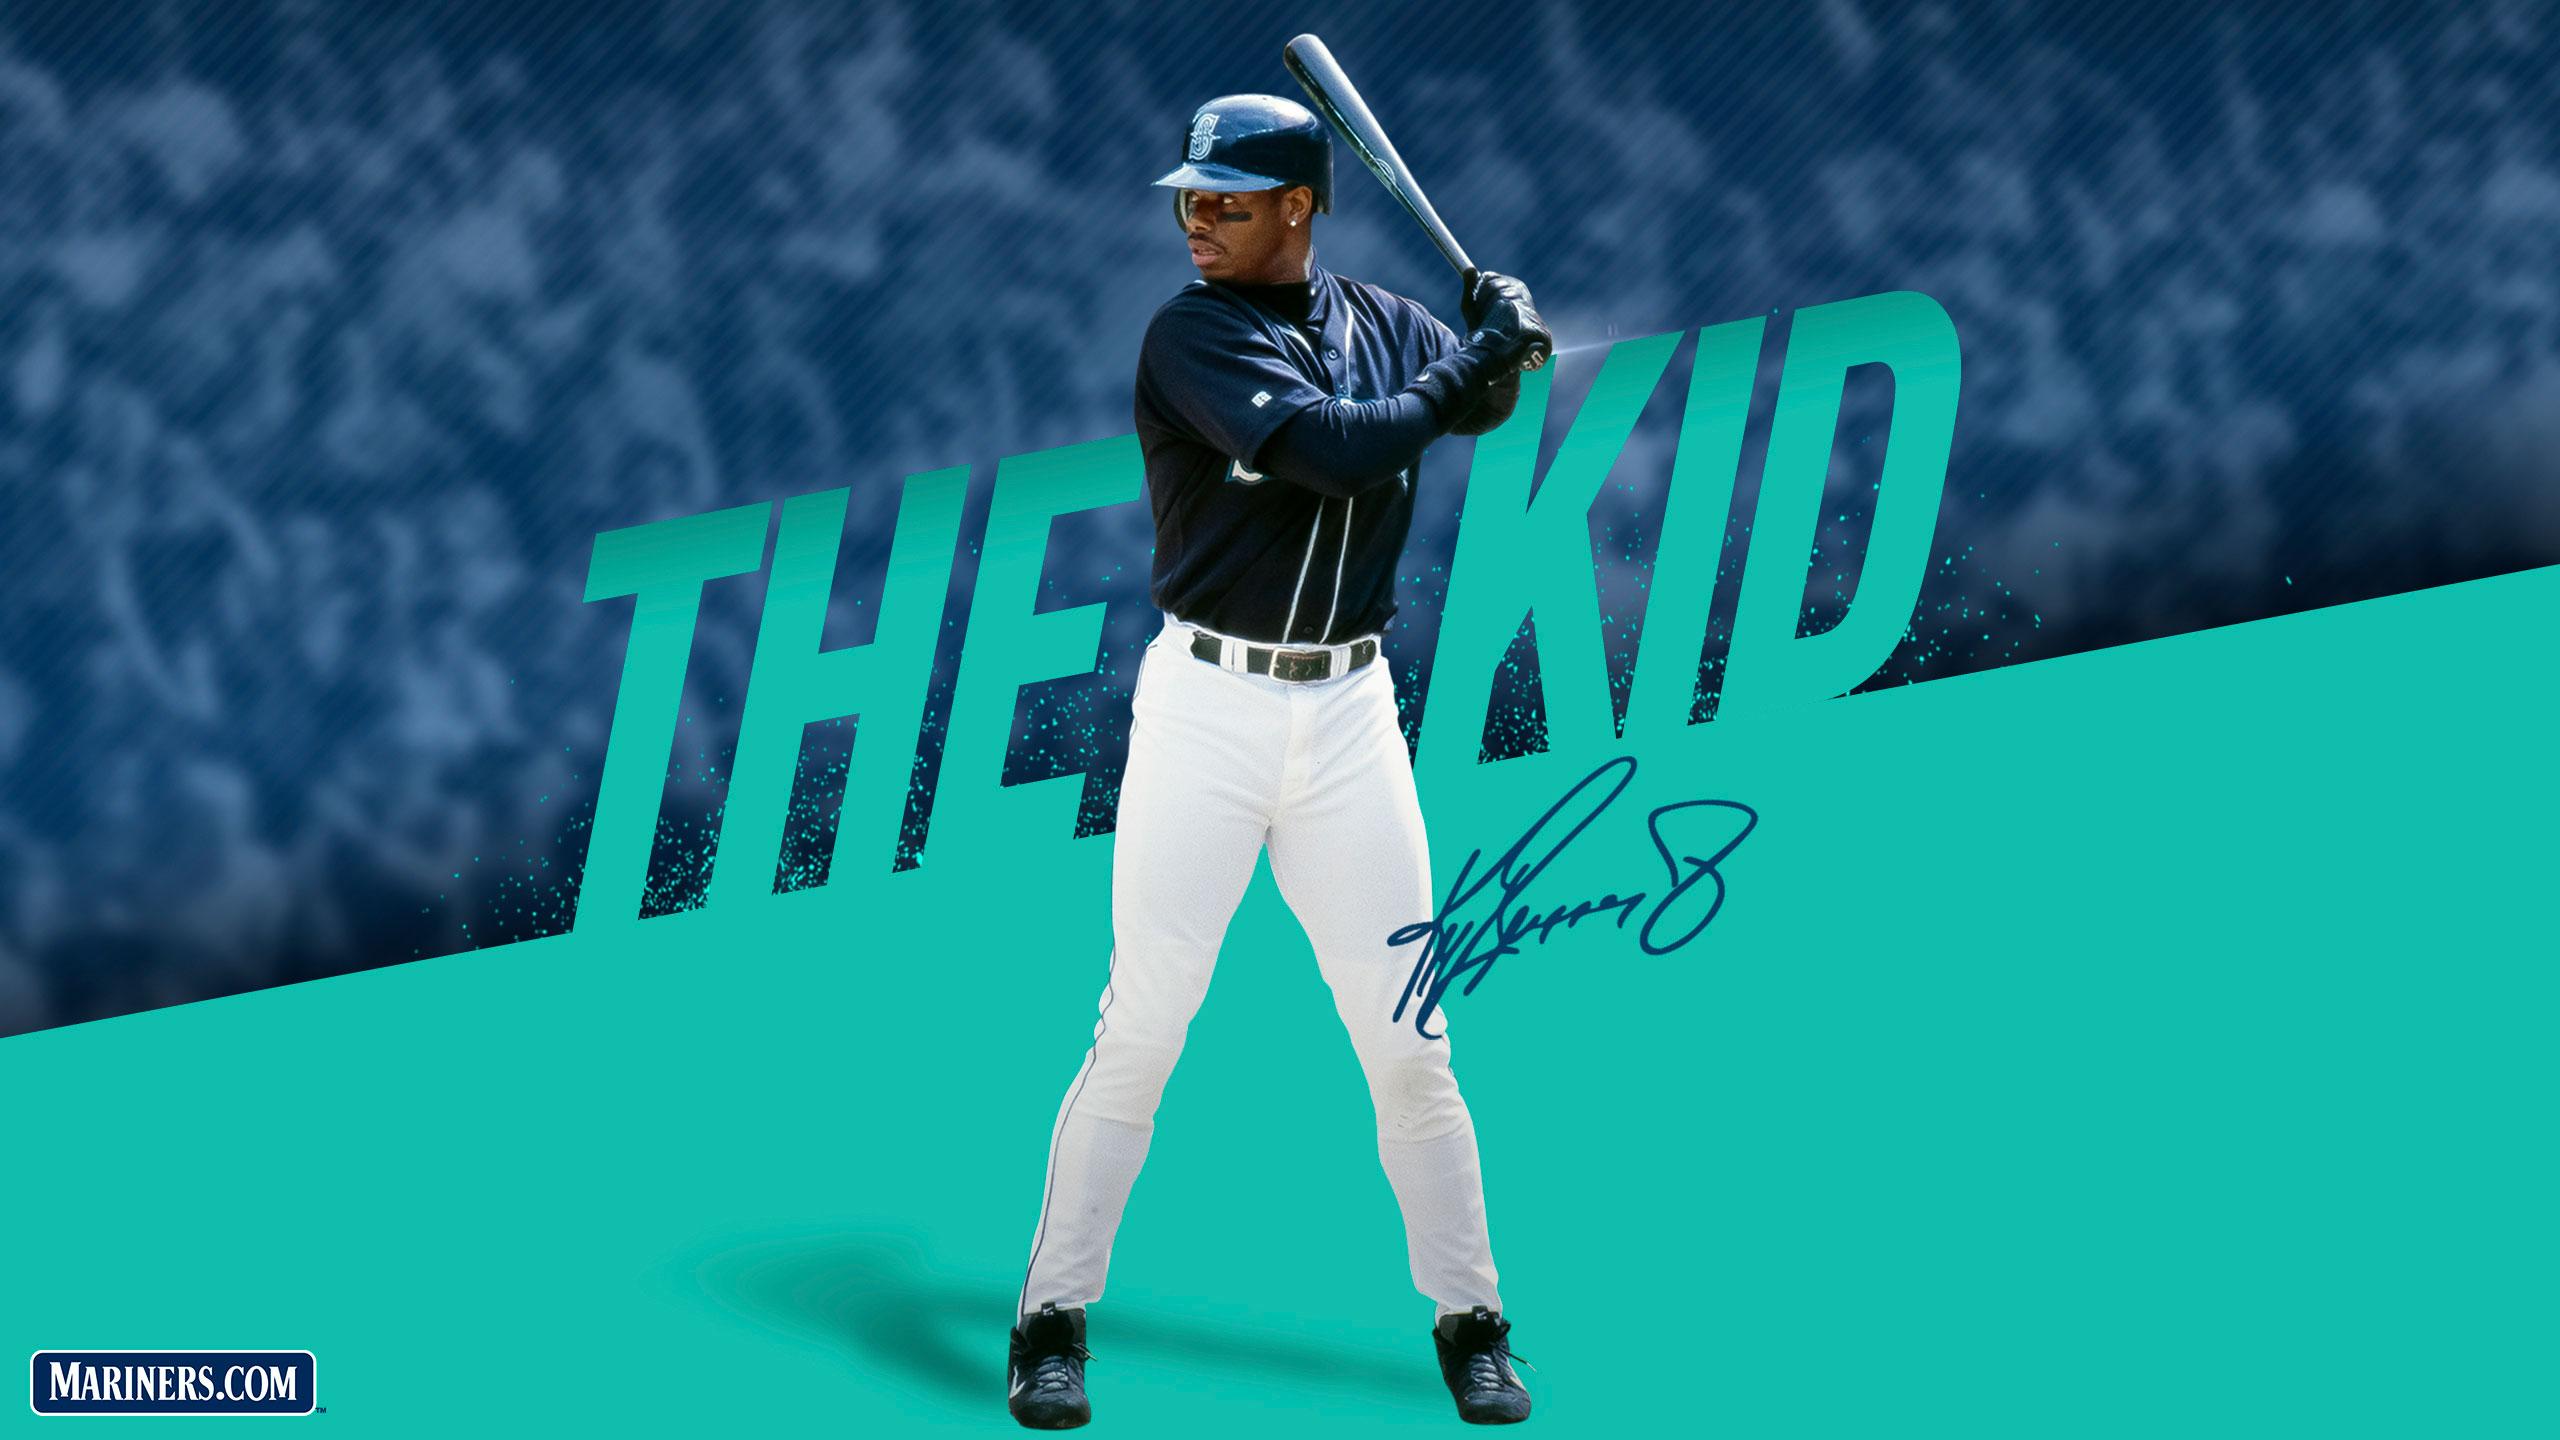 Download Hall of Fame baseball icon Ken Griffey Jr. Wallpaper